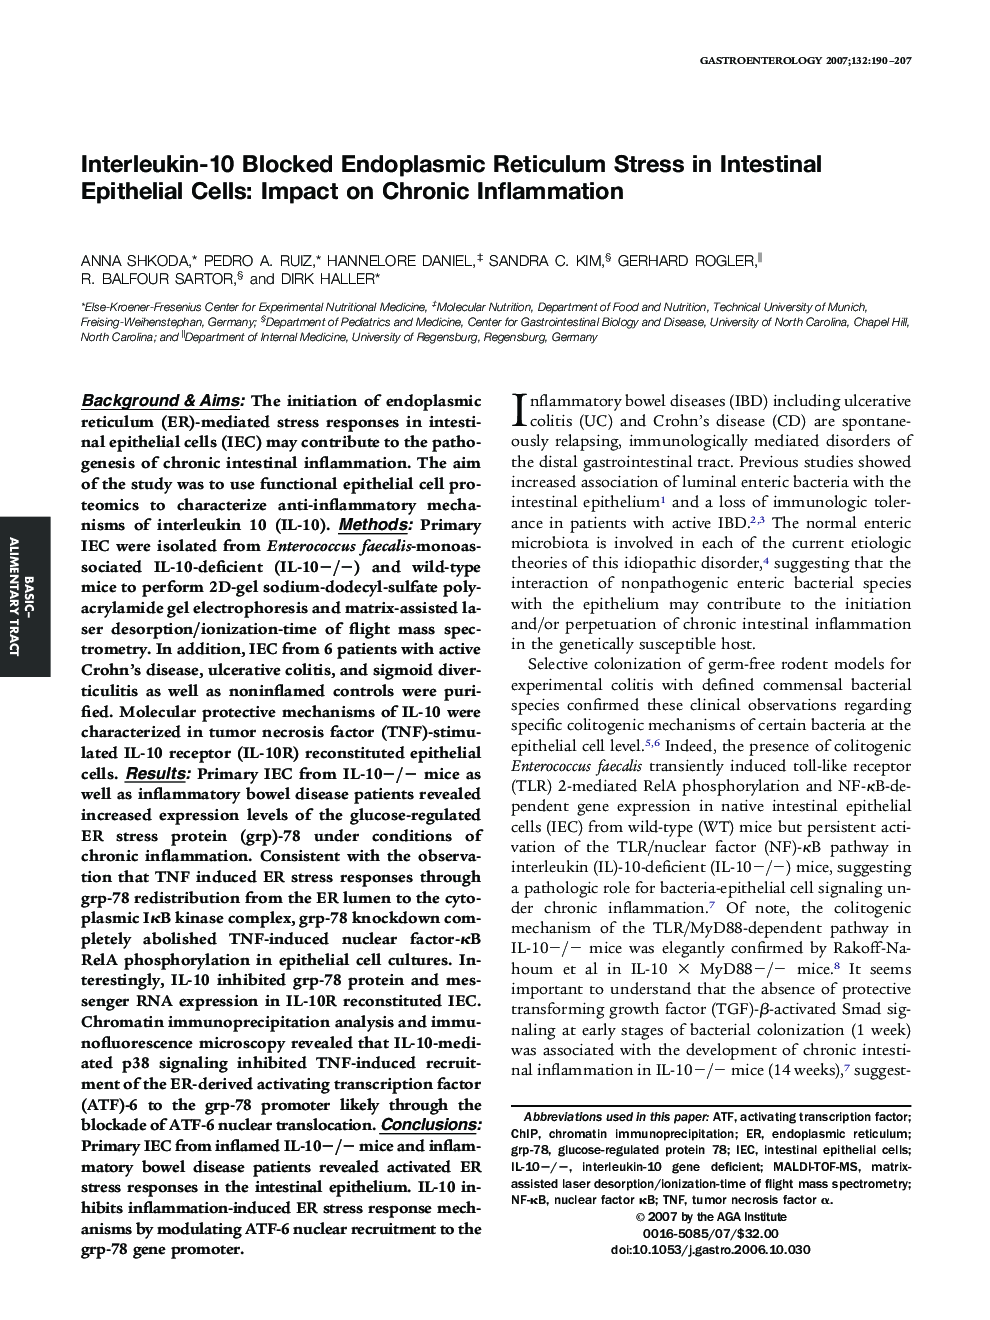 Interleukin-10 Blocked Endoplasmic Reticulum Stress in Intestinal Epithelial Cells: Impact on Chronic Inflammation 